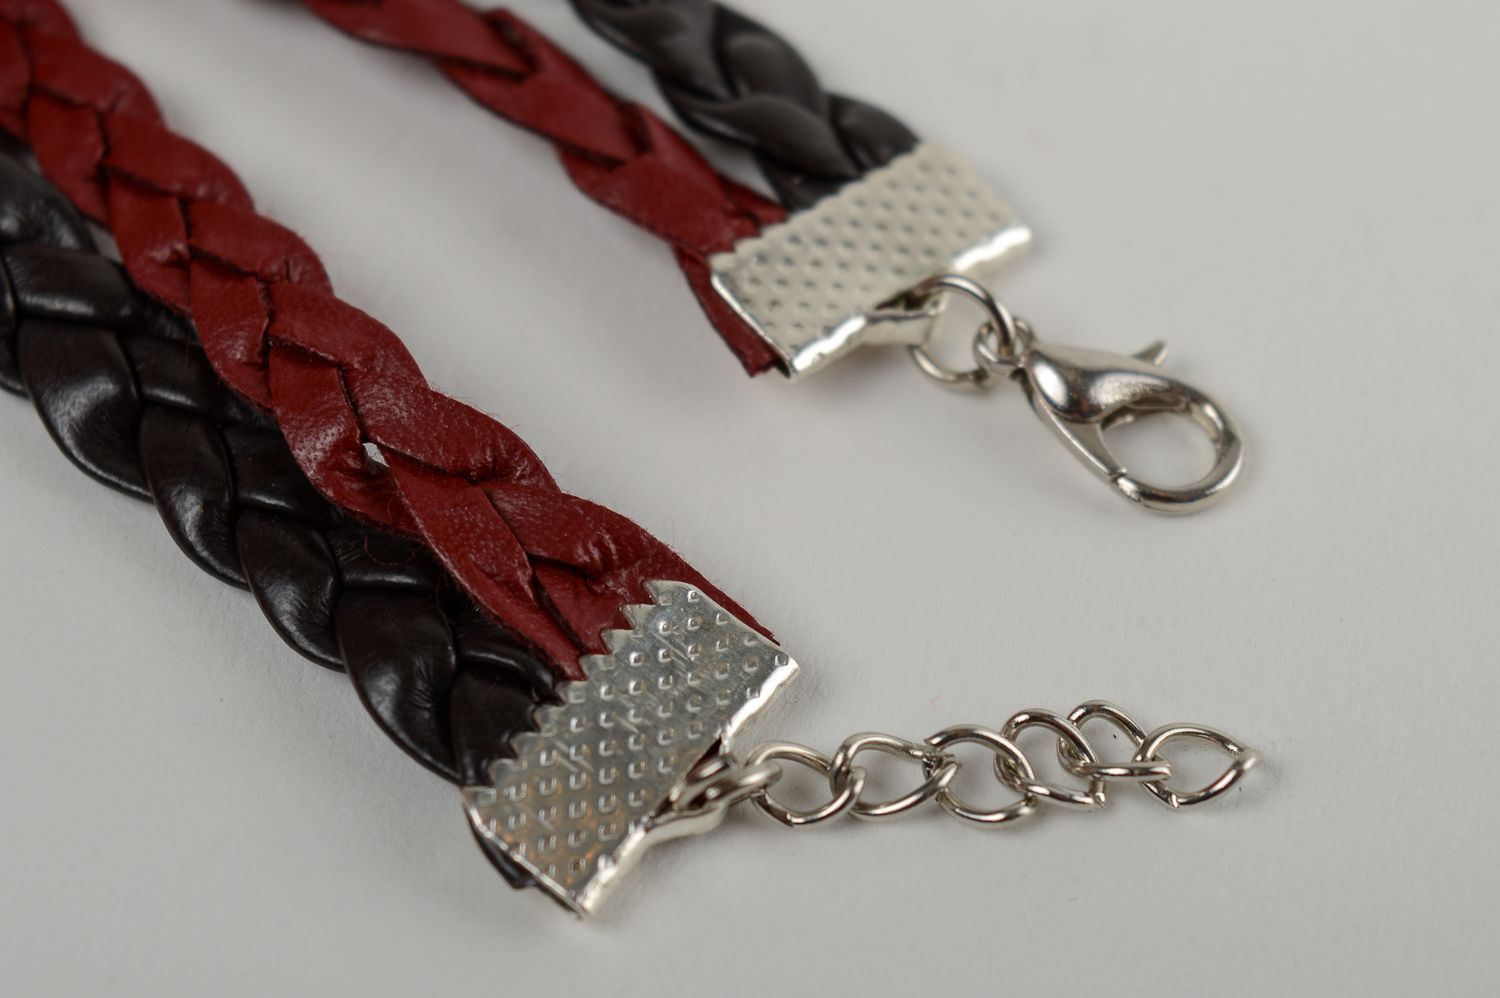 Unusual handmade leather bracelet wrist bracelet designs leather goods photo 4